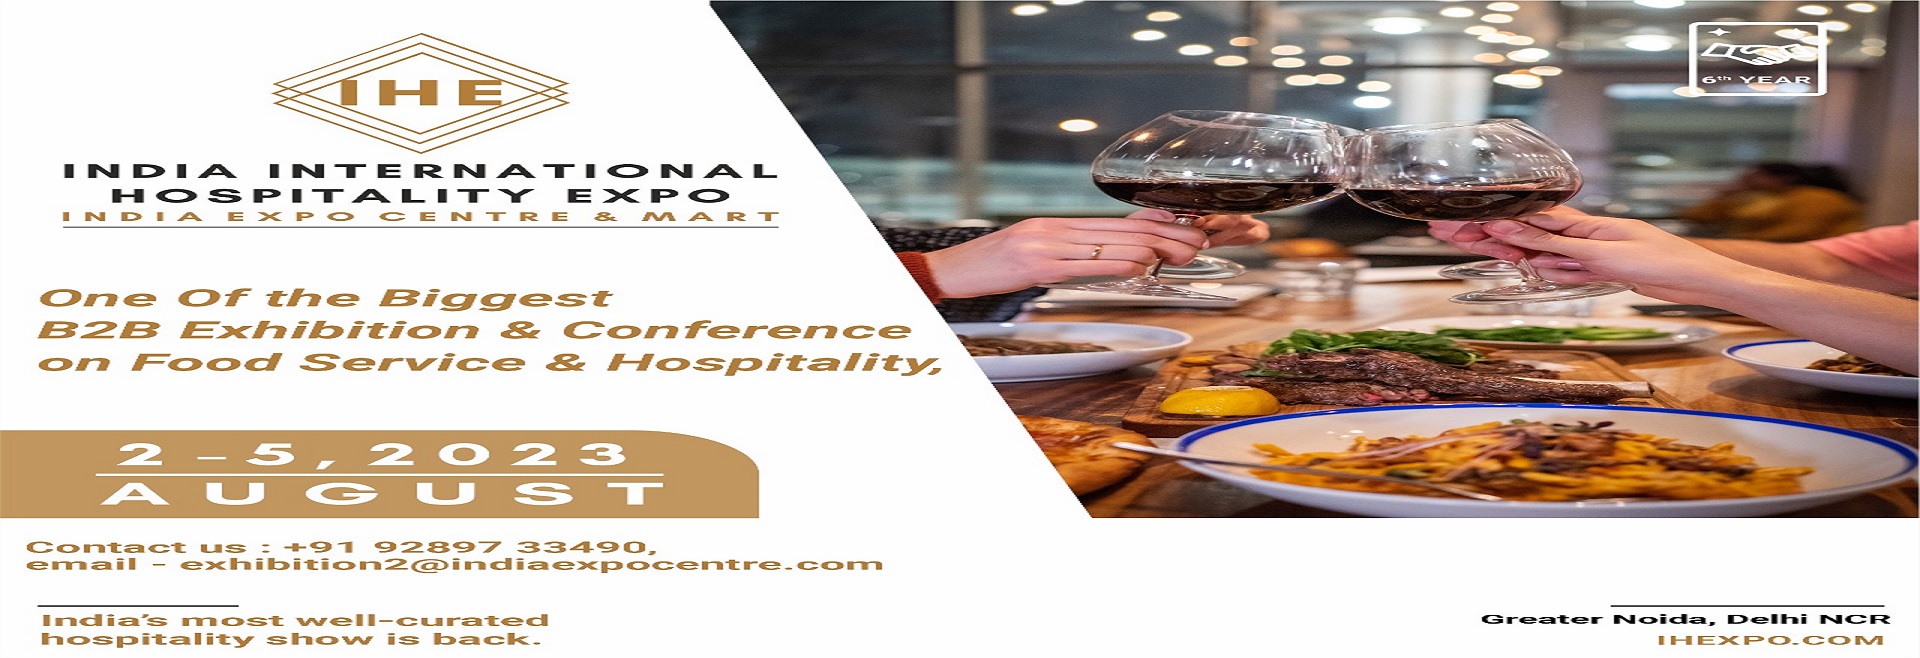 India International Hospitality Expo 2023 | August 2-5, 2023, Gautam Buddh Nagar, Uttar Pradesh, India